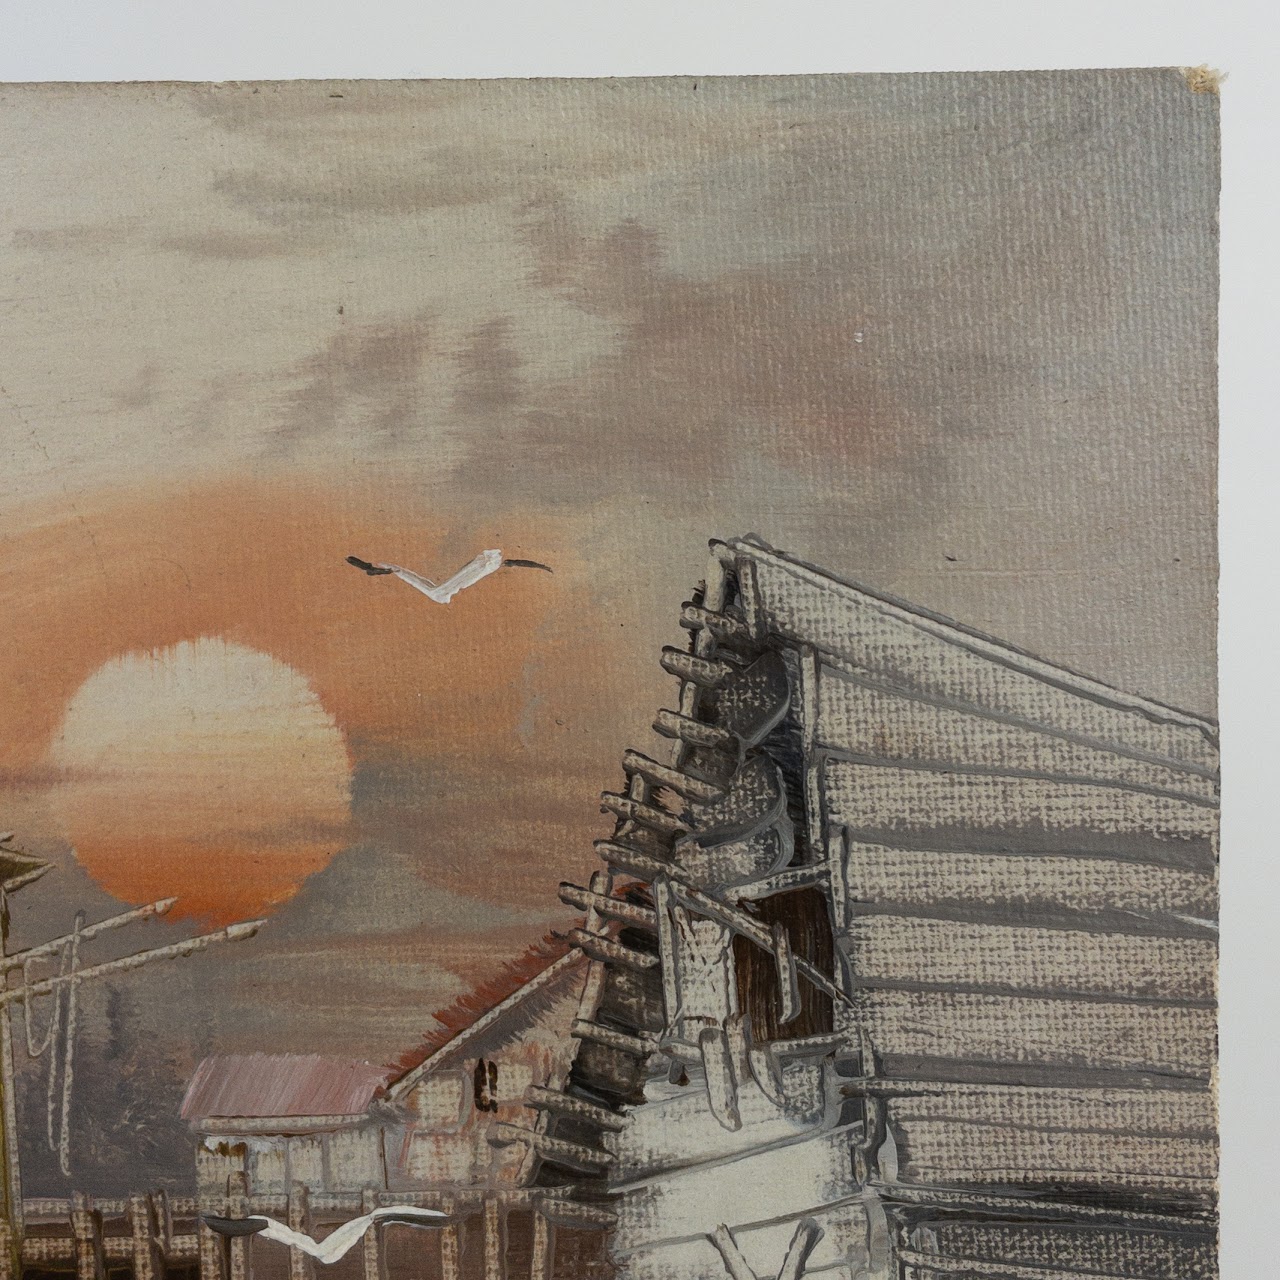 Fishing Port Scenes Paintings W. Zeller